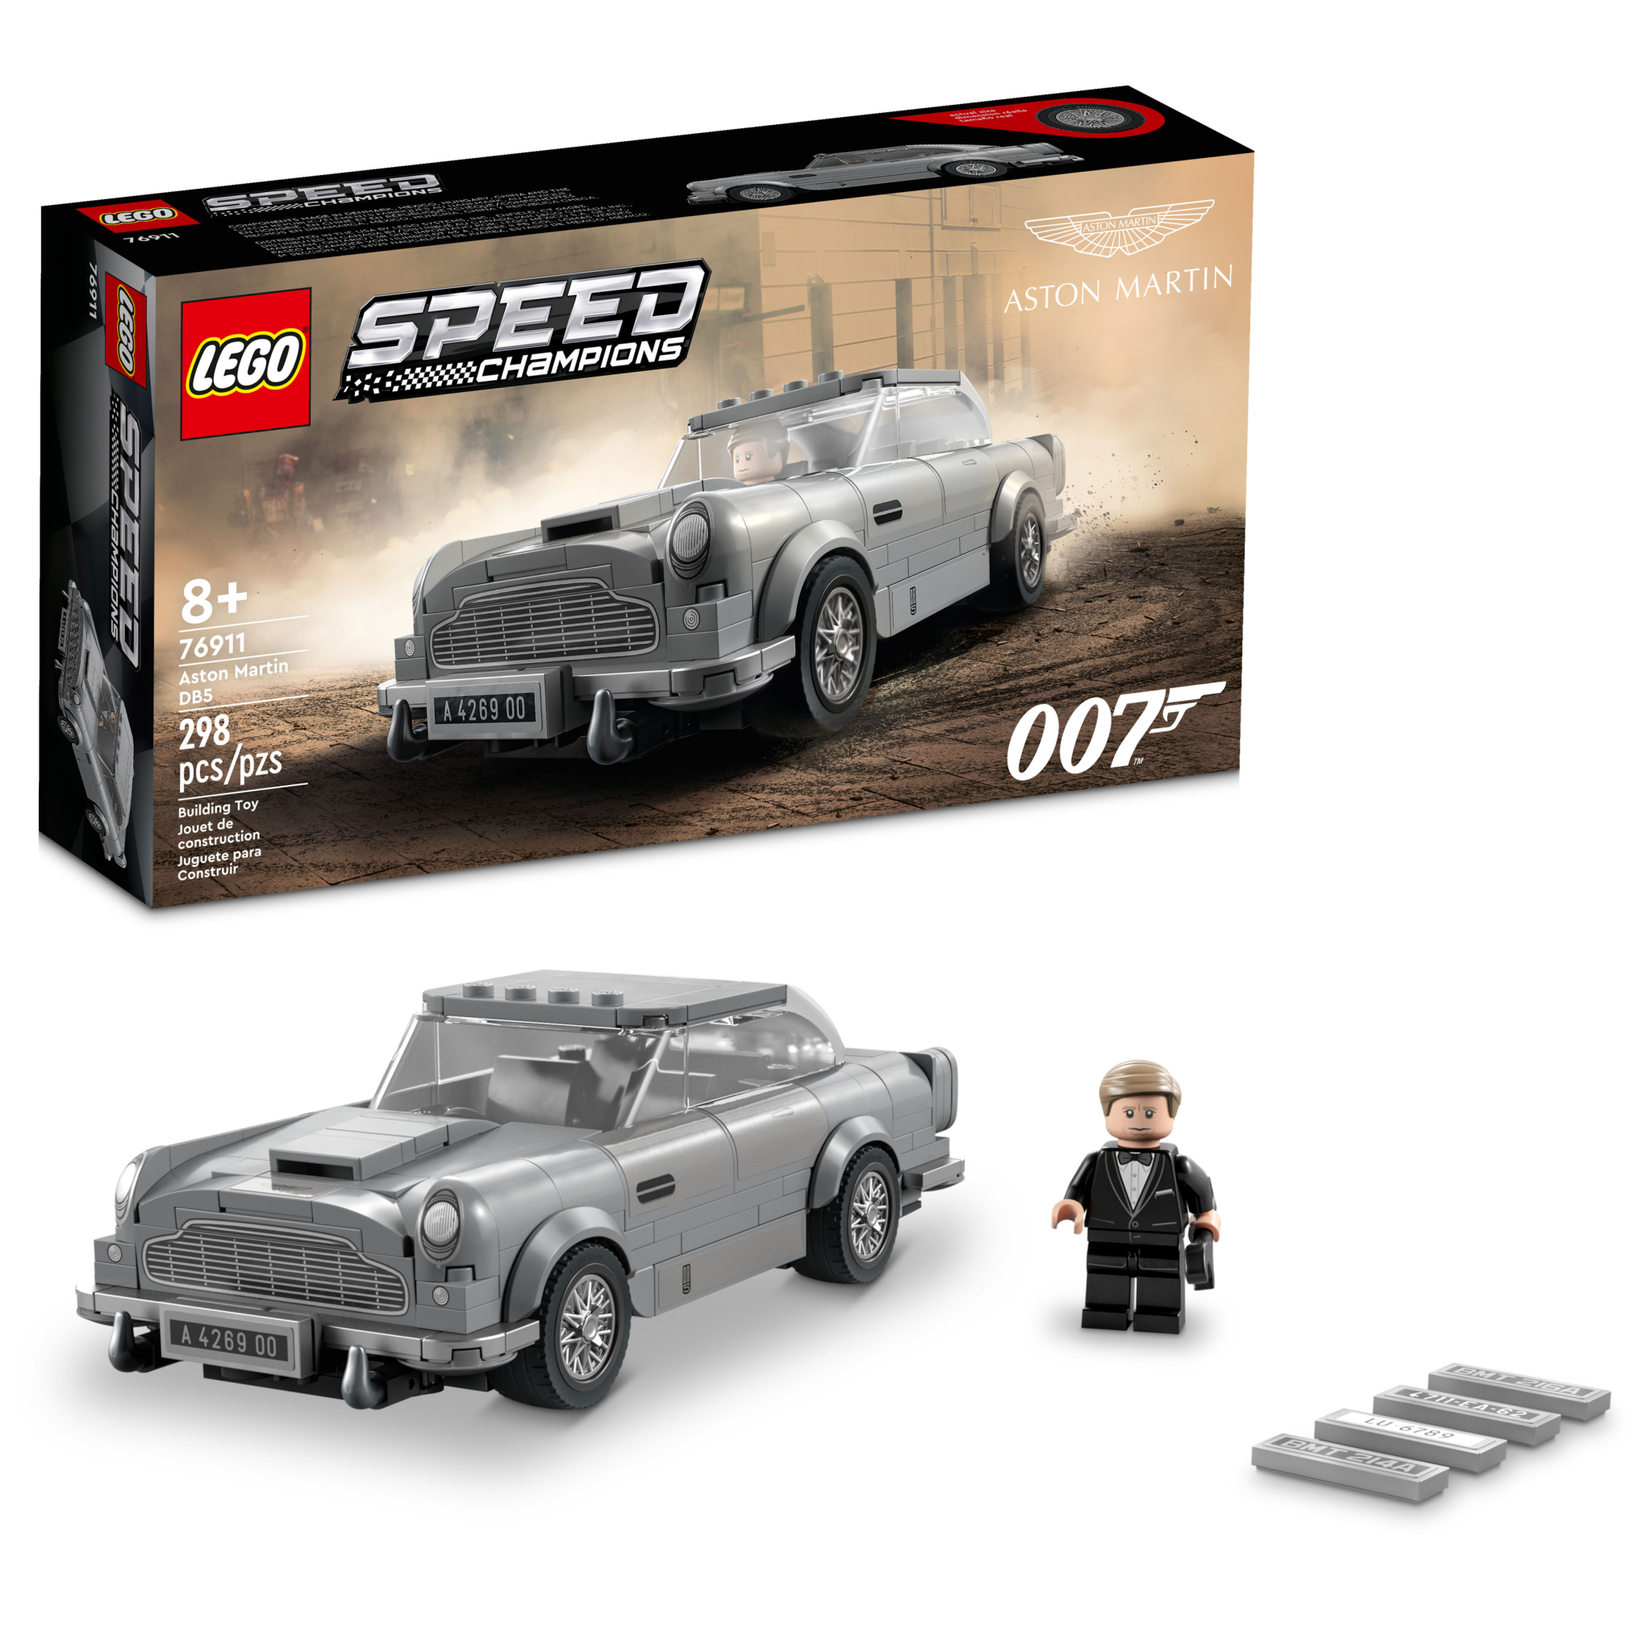 LEGO LEGO Speed Champions 007 Aston Martin DB5 76911